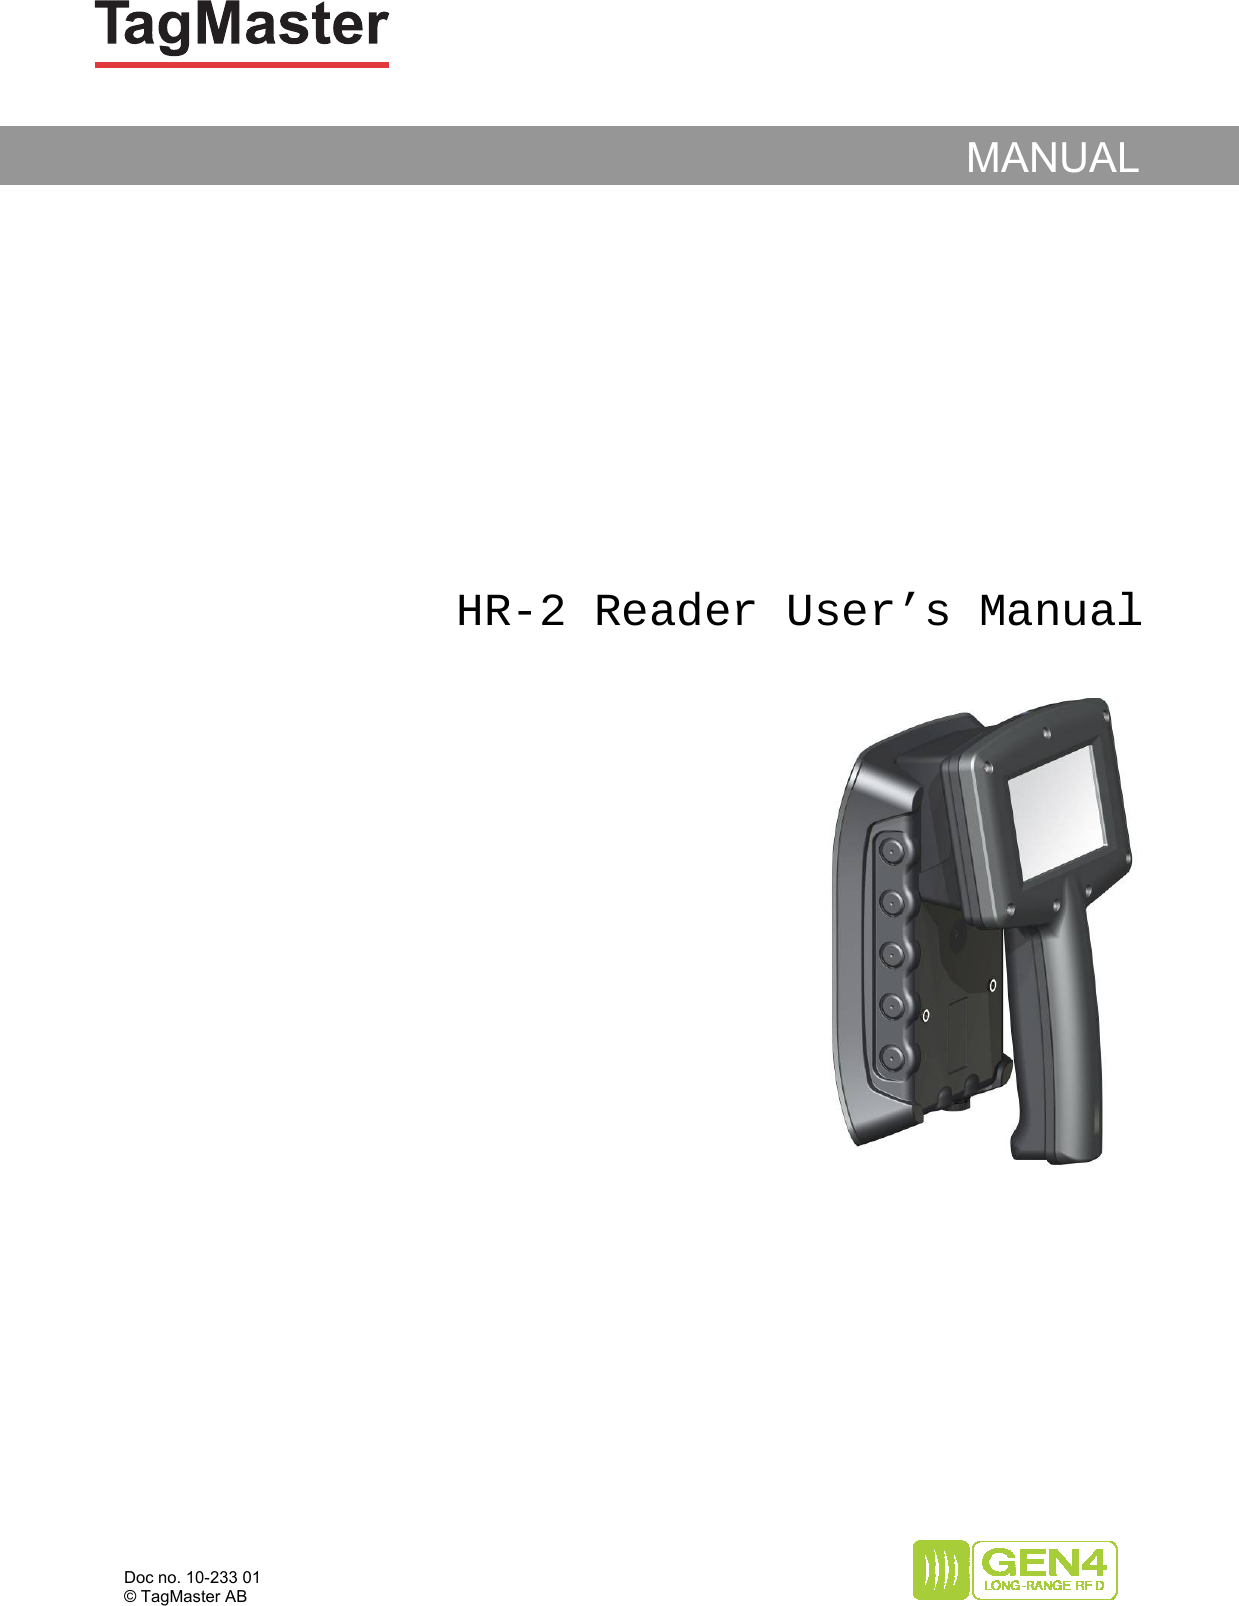   Doc no. 10-233 01 © TagMaster AB                                                                             HR-2 Reader User’s Manual                MANUAL